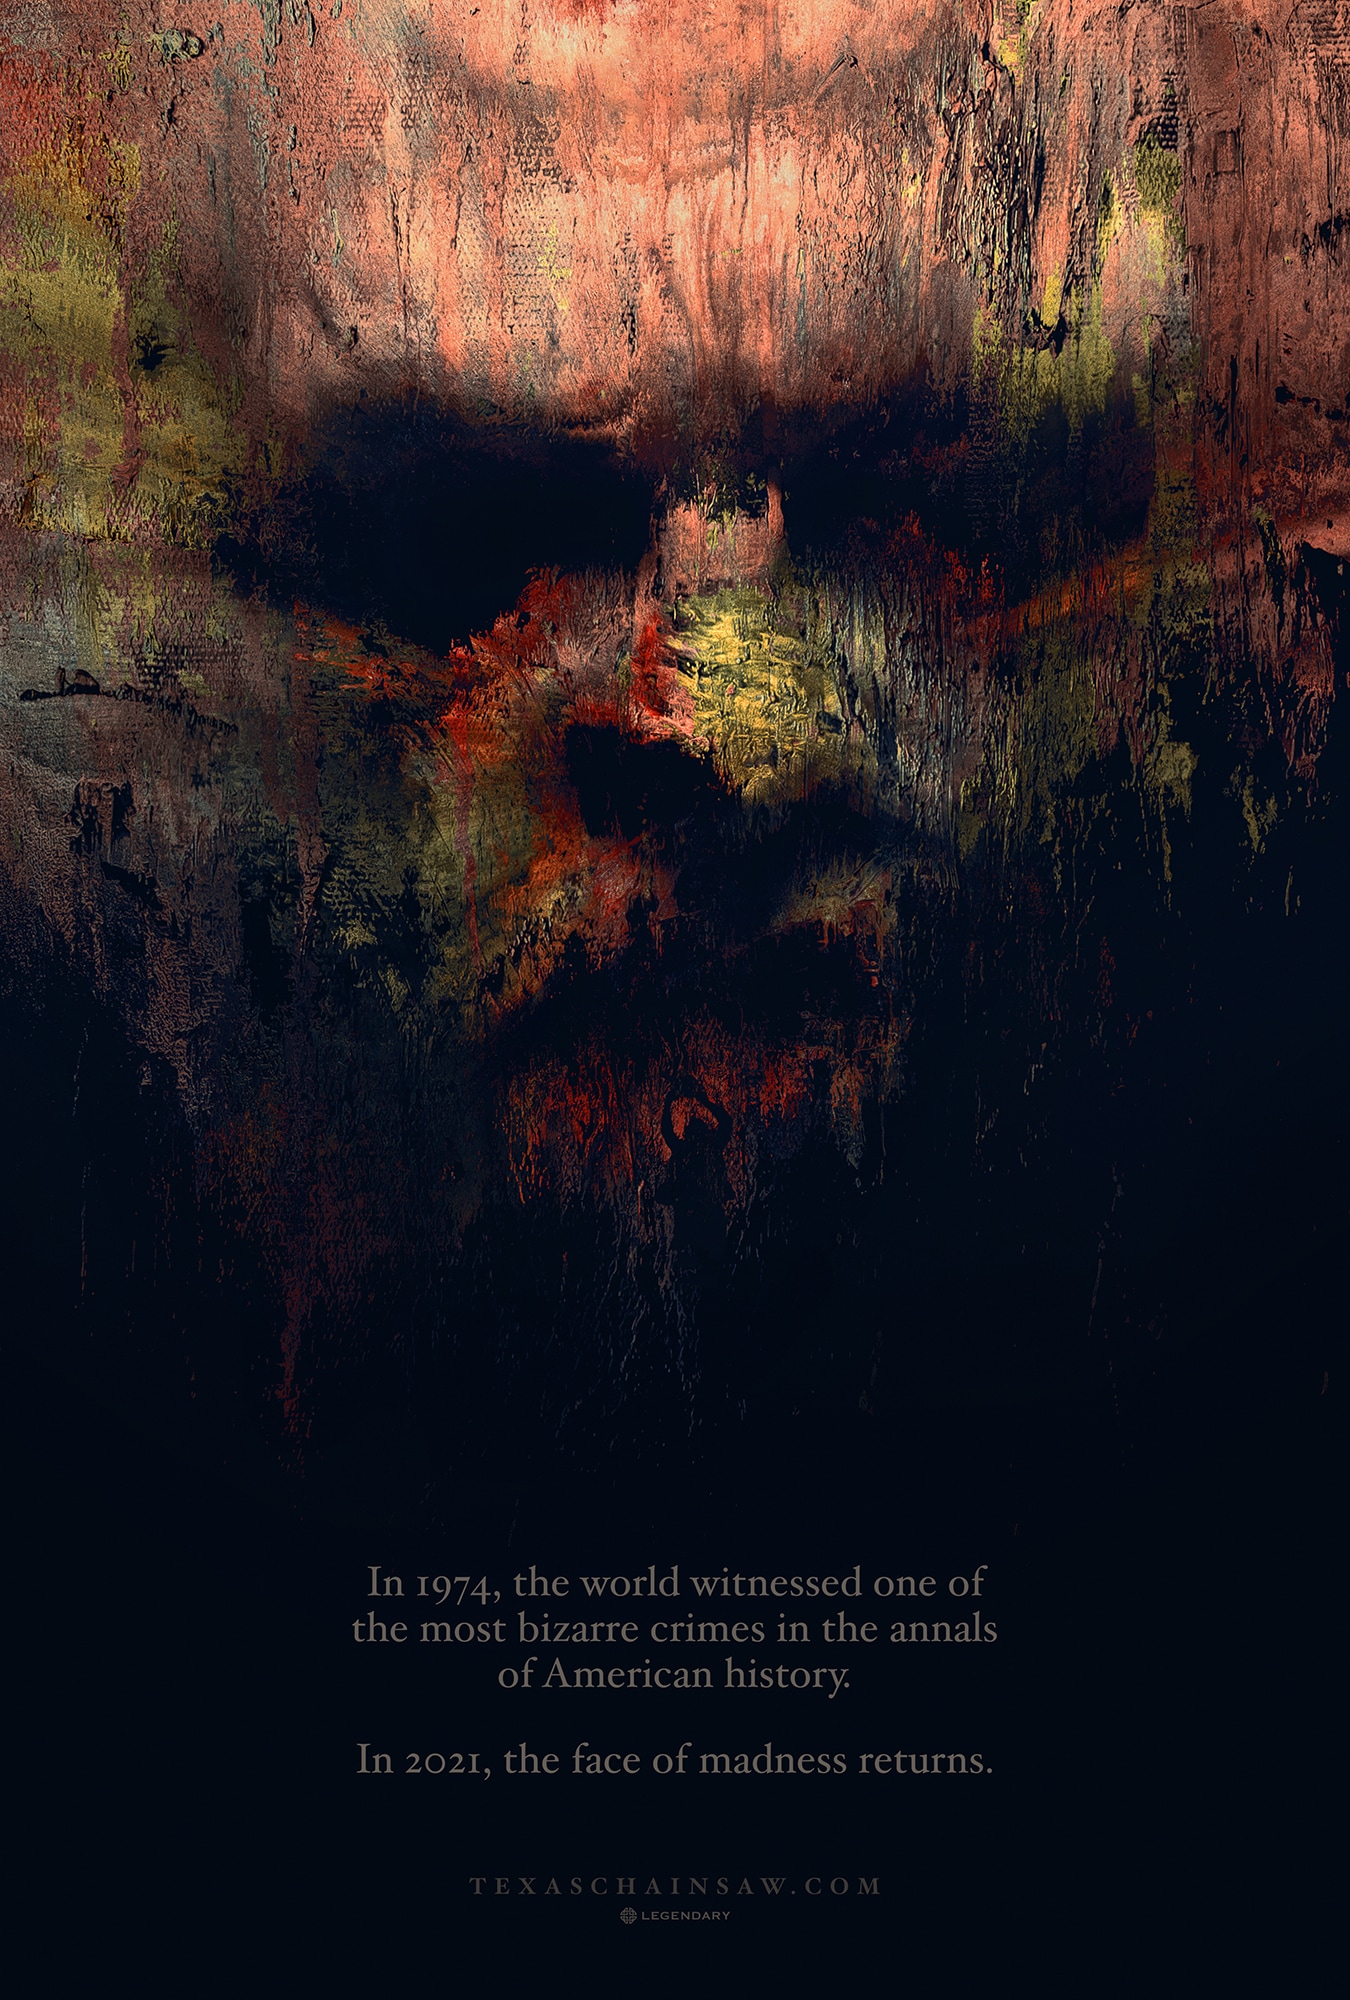 Texas Chainsaw Massacre 2022 affiche film